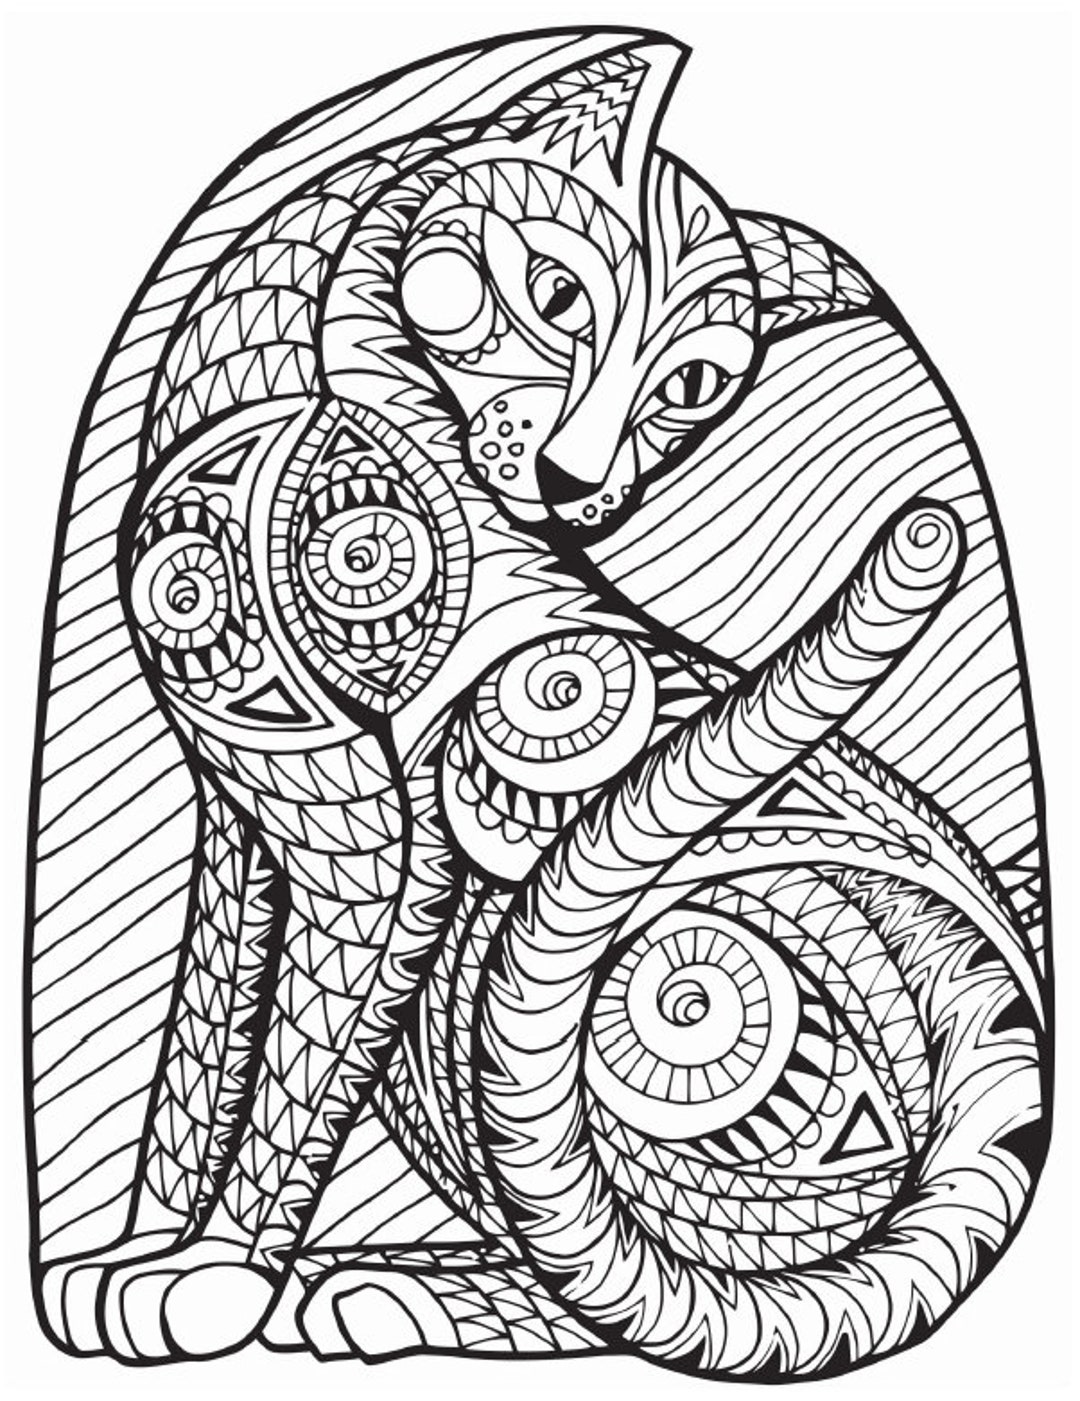 Mythical Cat Mandala Coloring Page ...